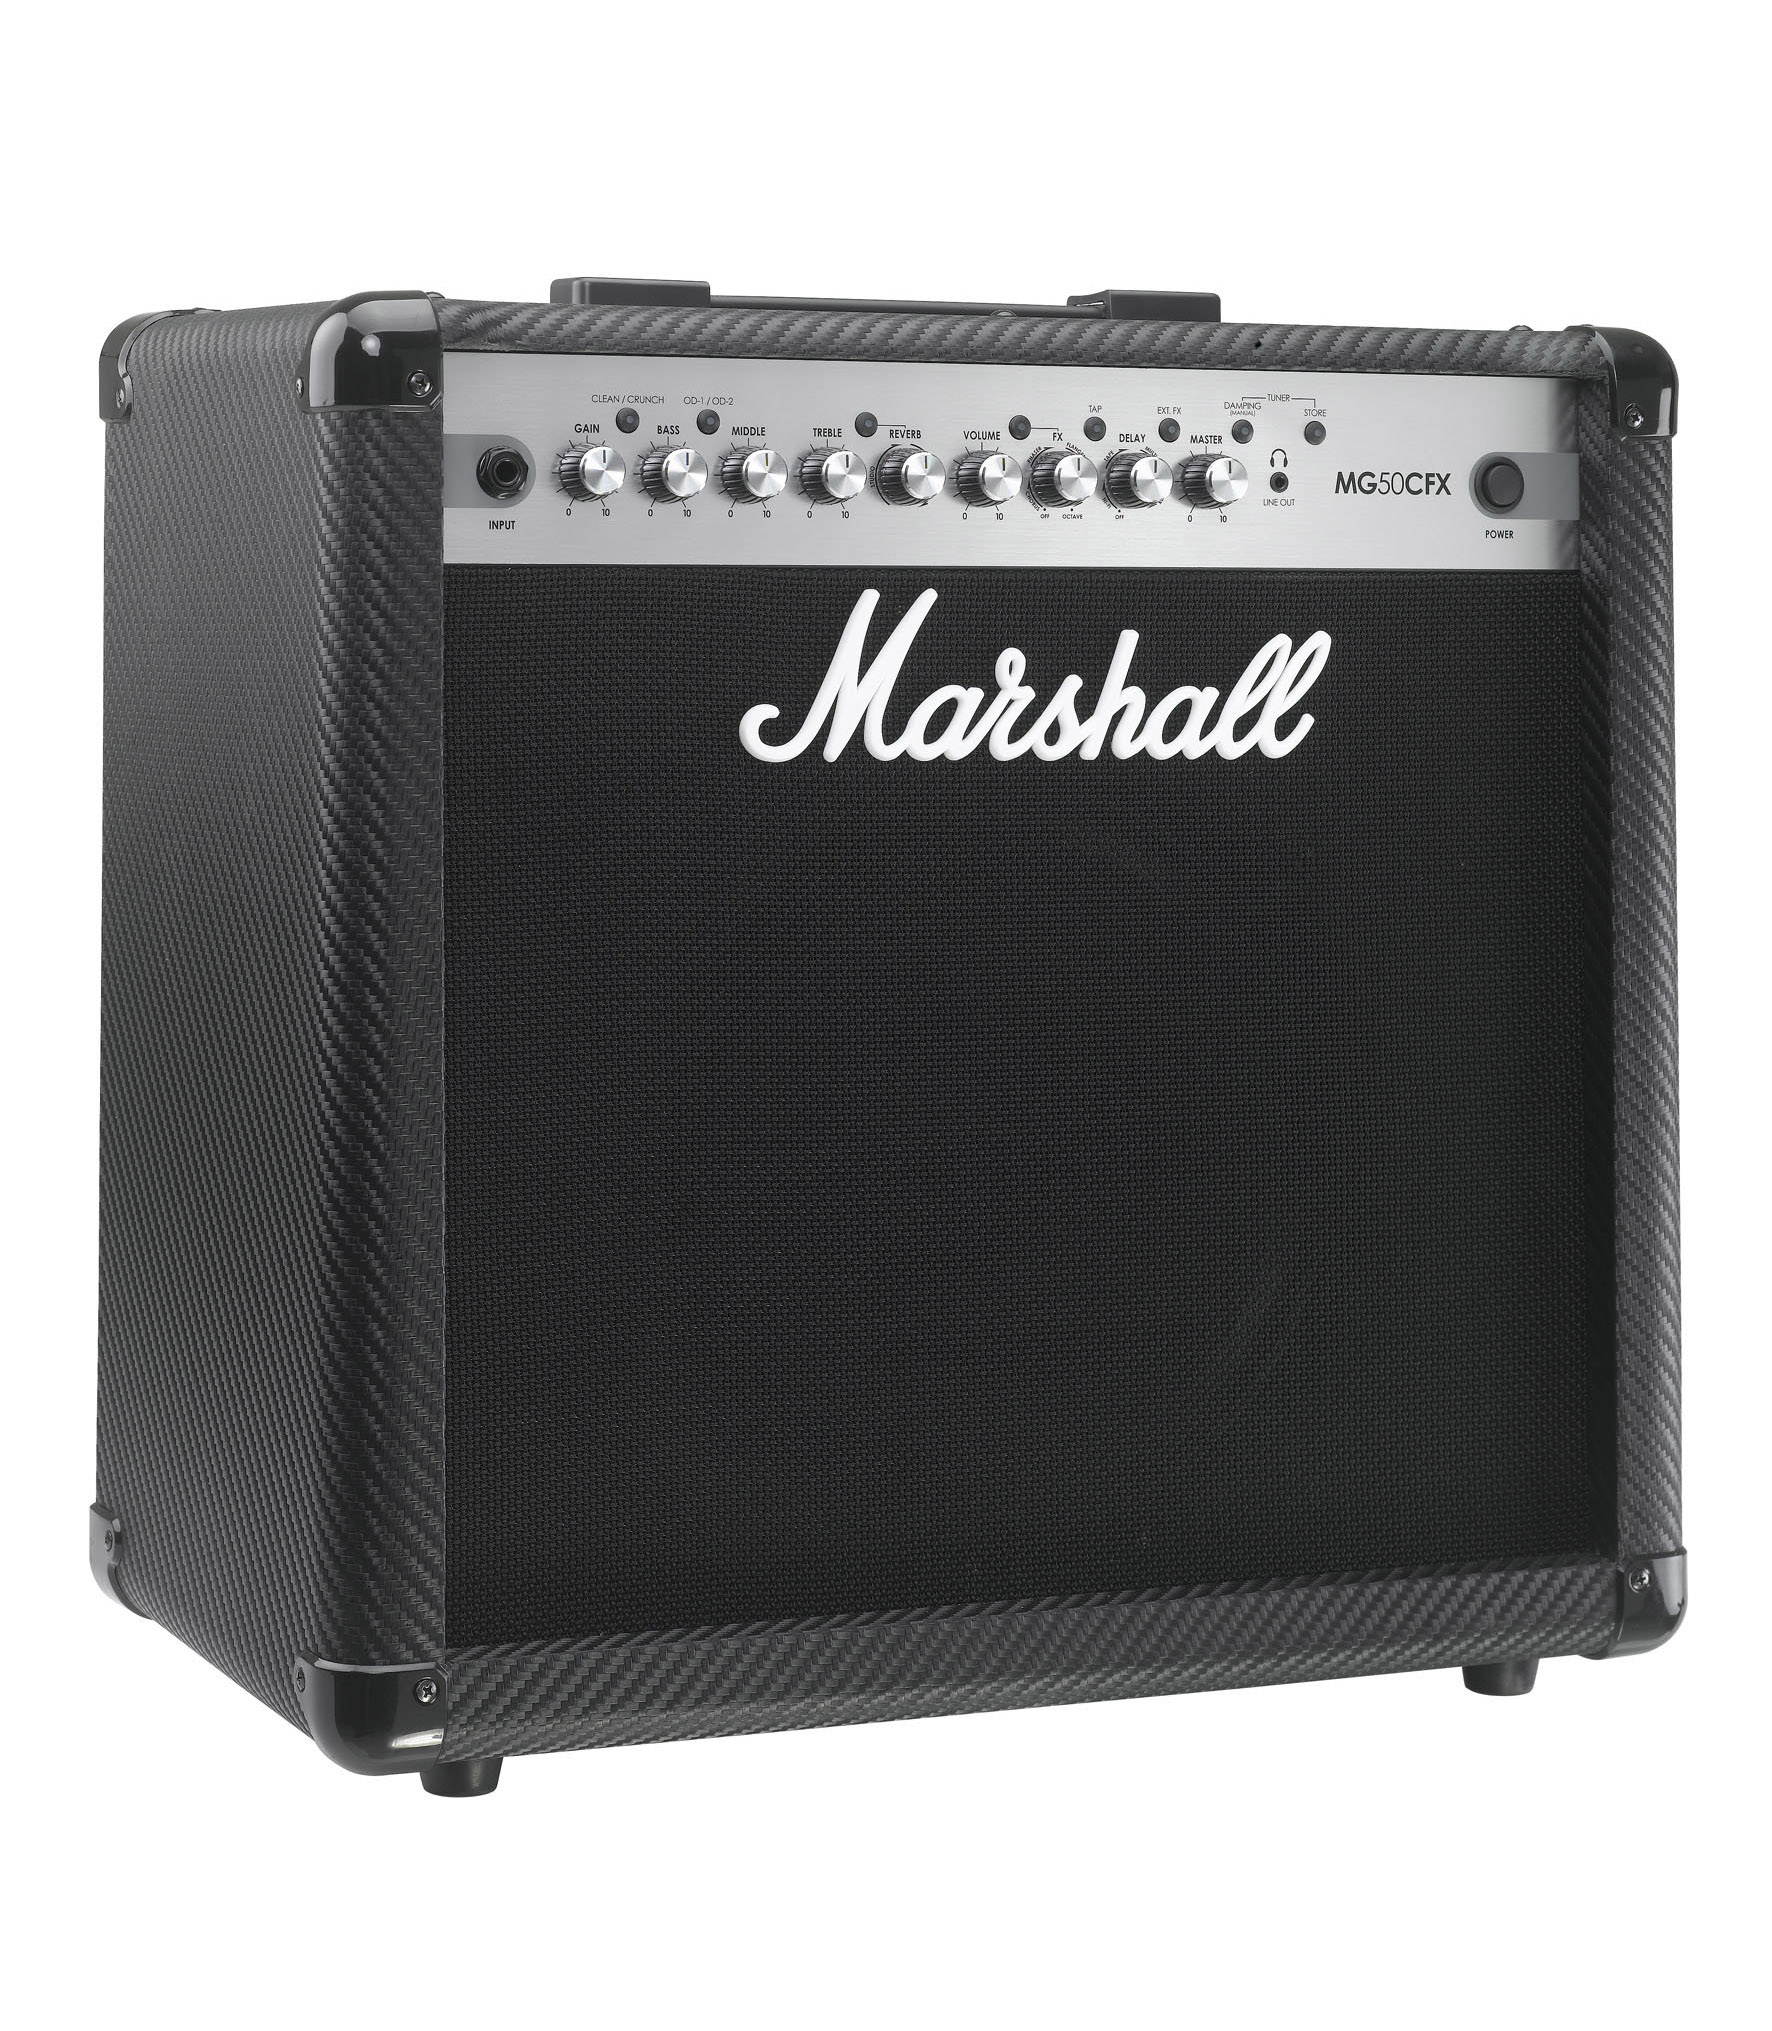 Marshall - MG50CFX - Melody House Musical Instruments